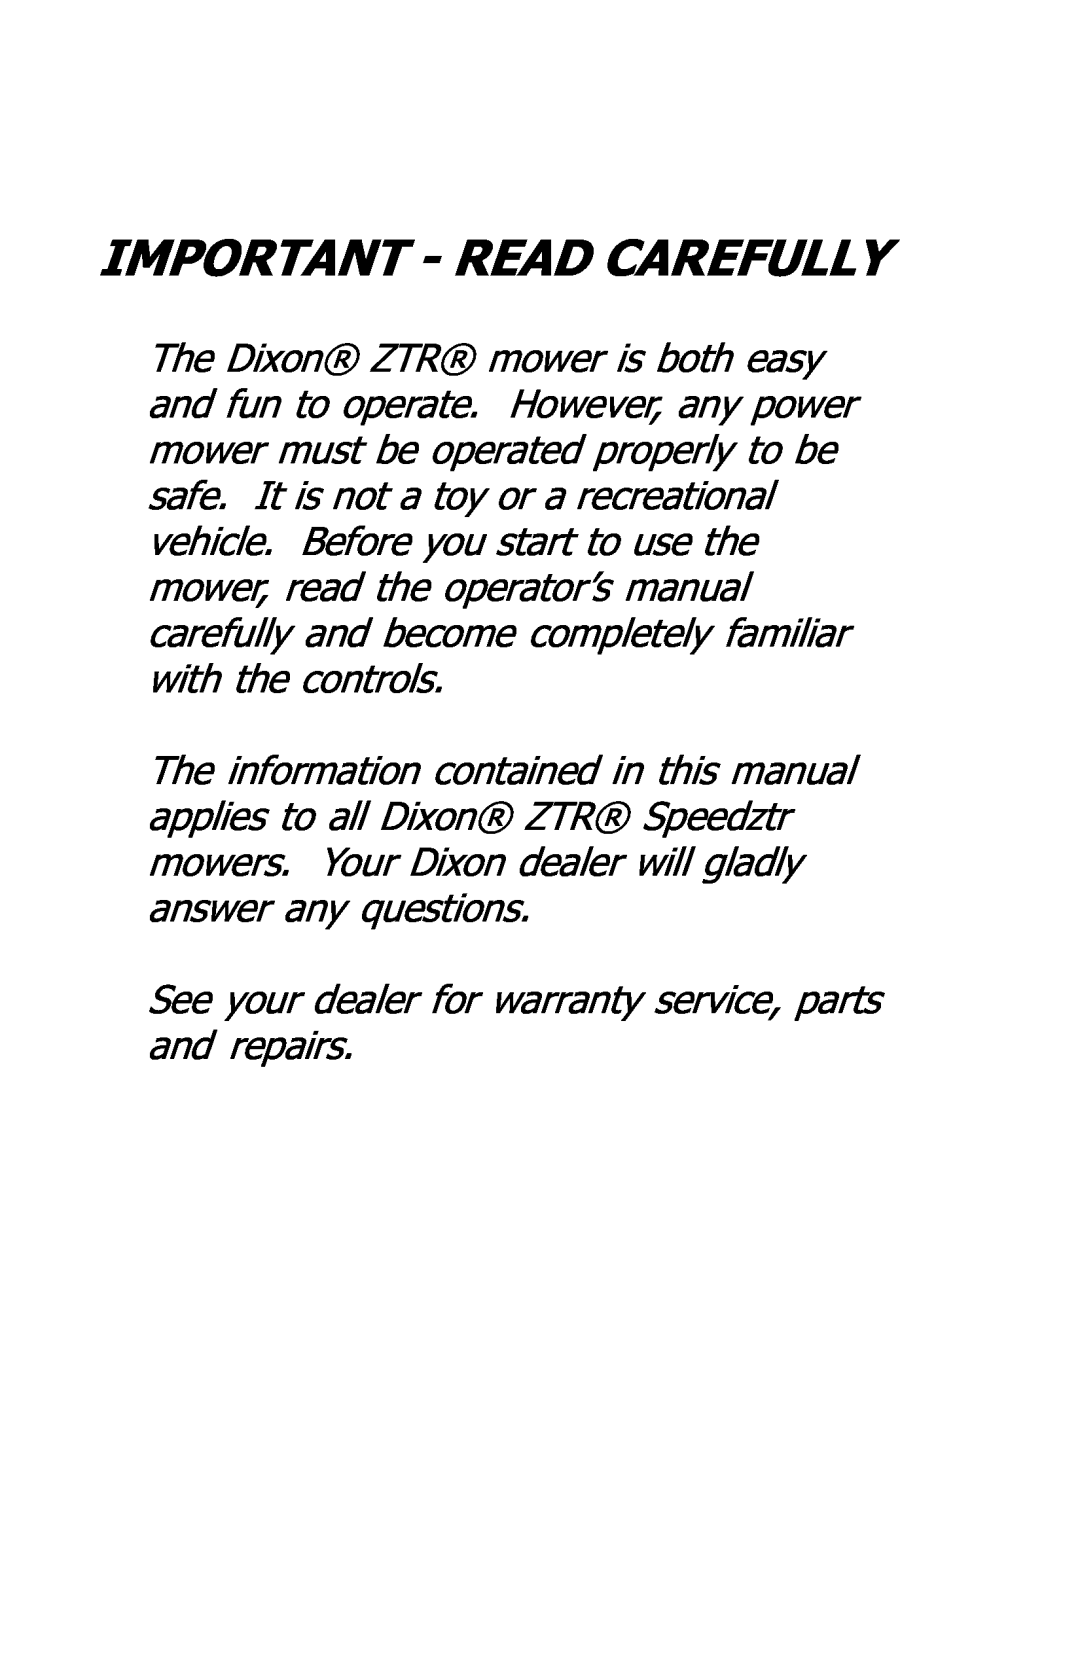 Dixon 16134-0803 manual Important - Read Carefully 